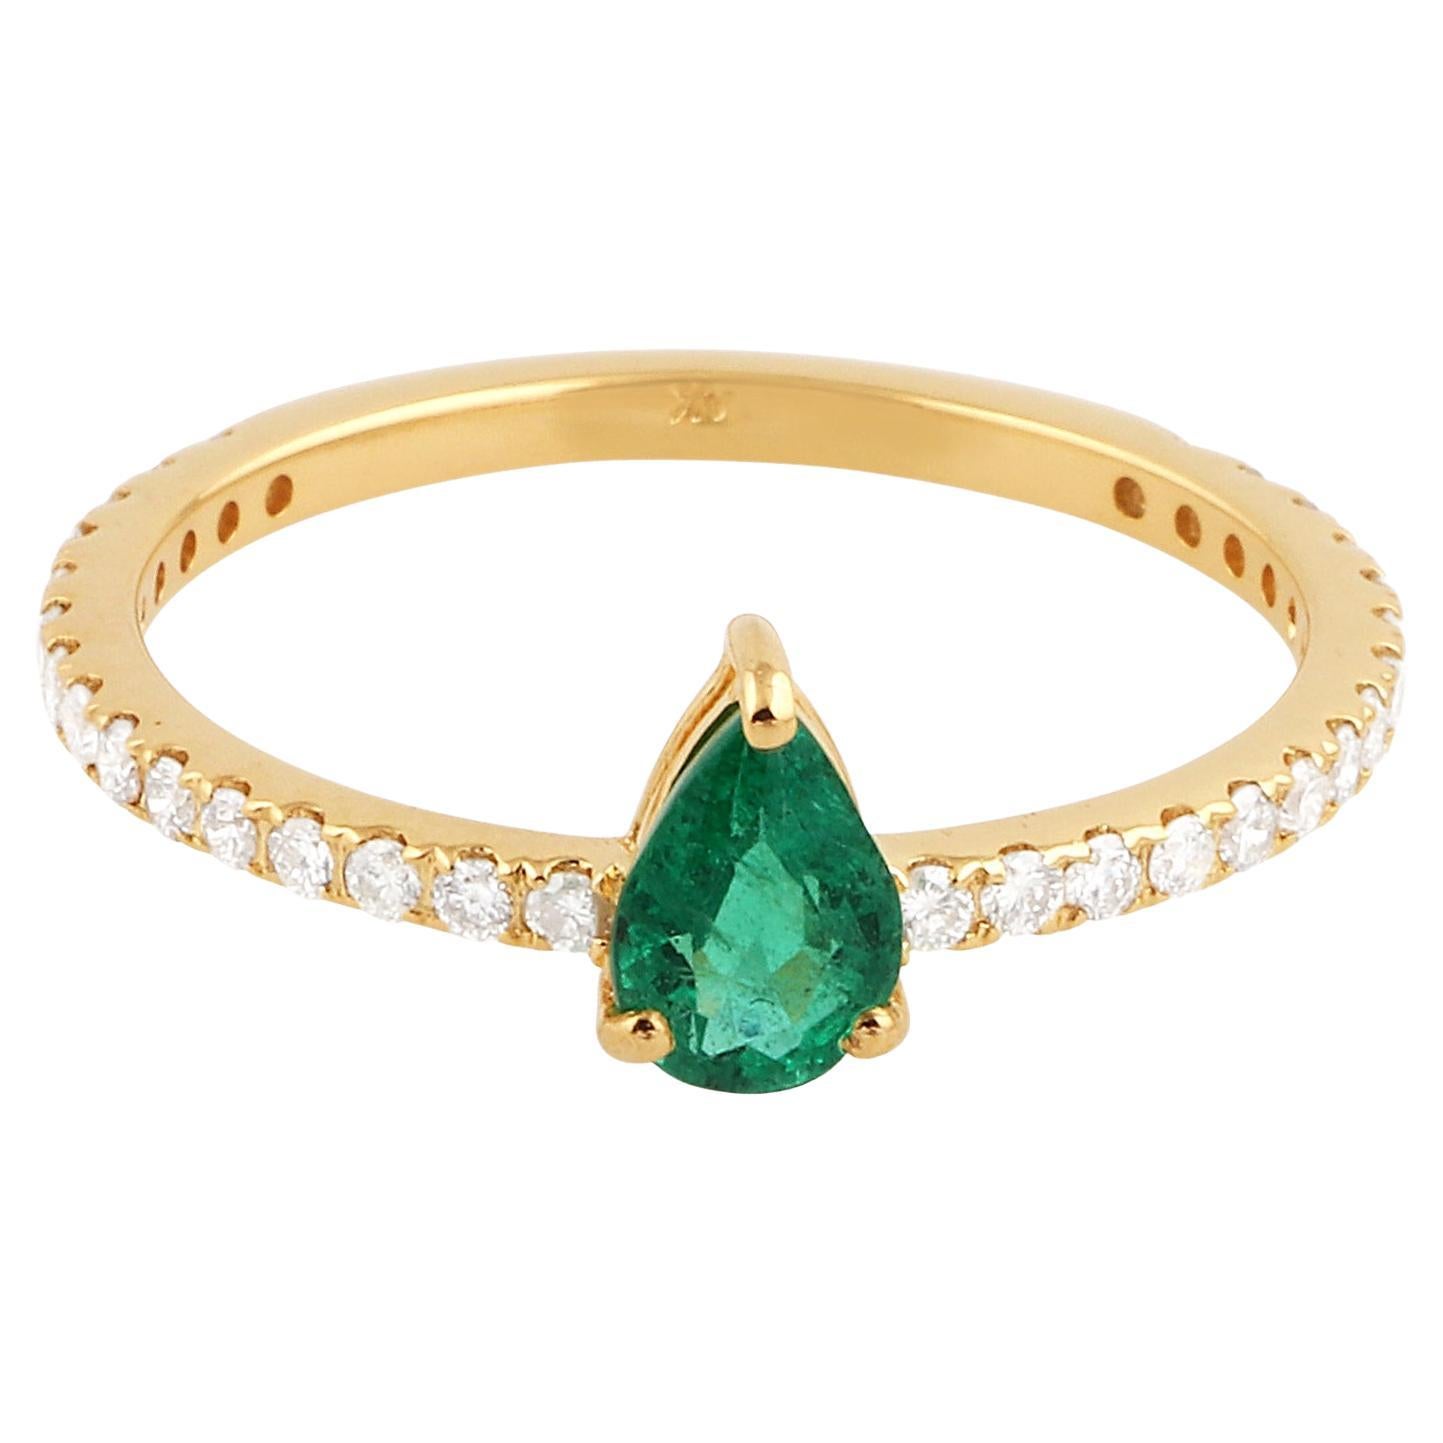 For Sale:  Pear Zambian Emerald Gemstone Band Ring Diamond 14 Karat Yellow Gold Jewelry